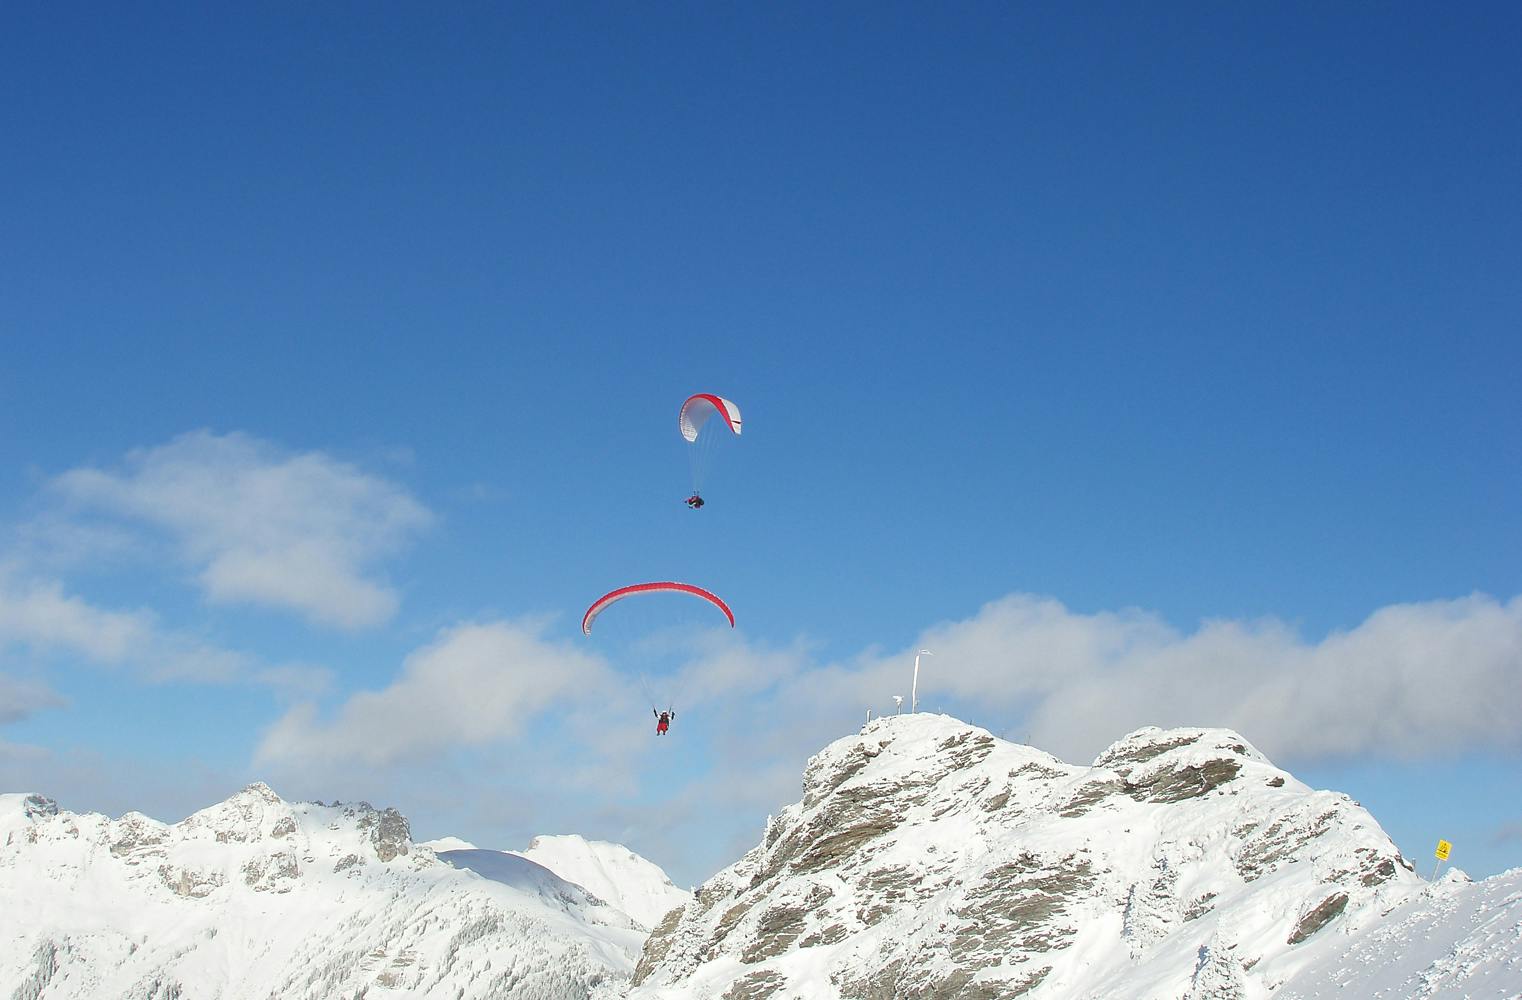 Winteraction | Gleitschirm Tandemflug im Skizirkus Amade